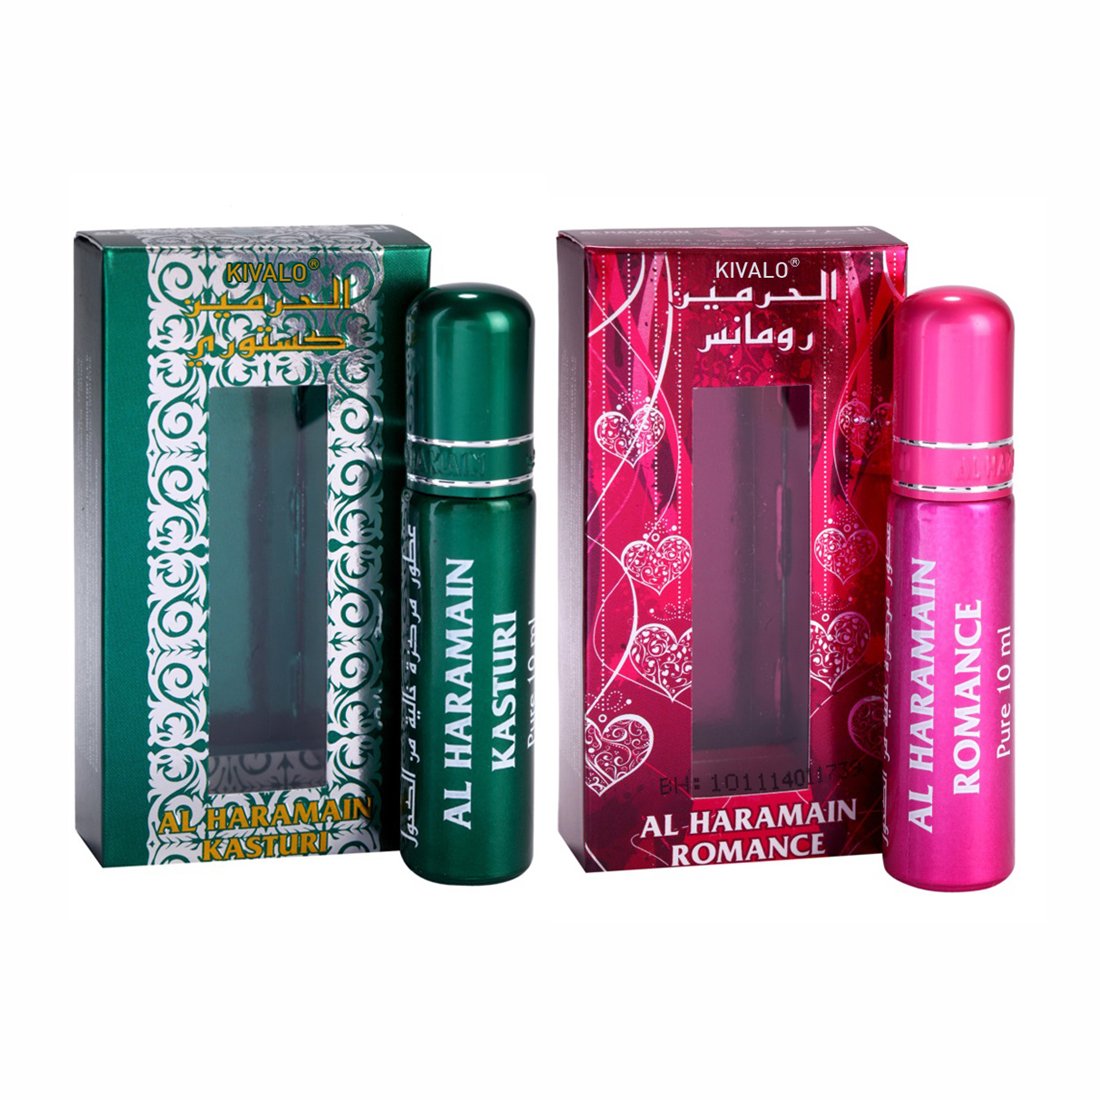 Al Haramain Kasturi & Romance Fragrance Pure Original Roll On Attar Combo Pack of 2 x 10 ml